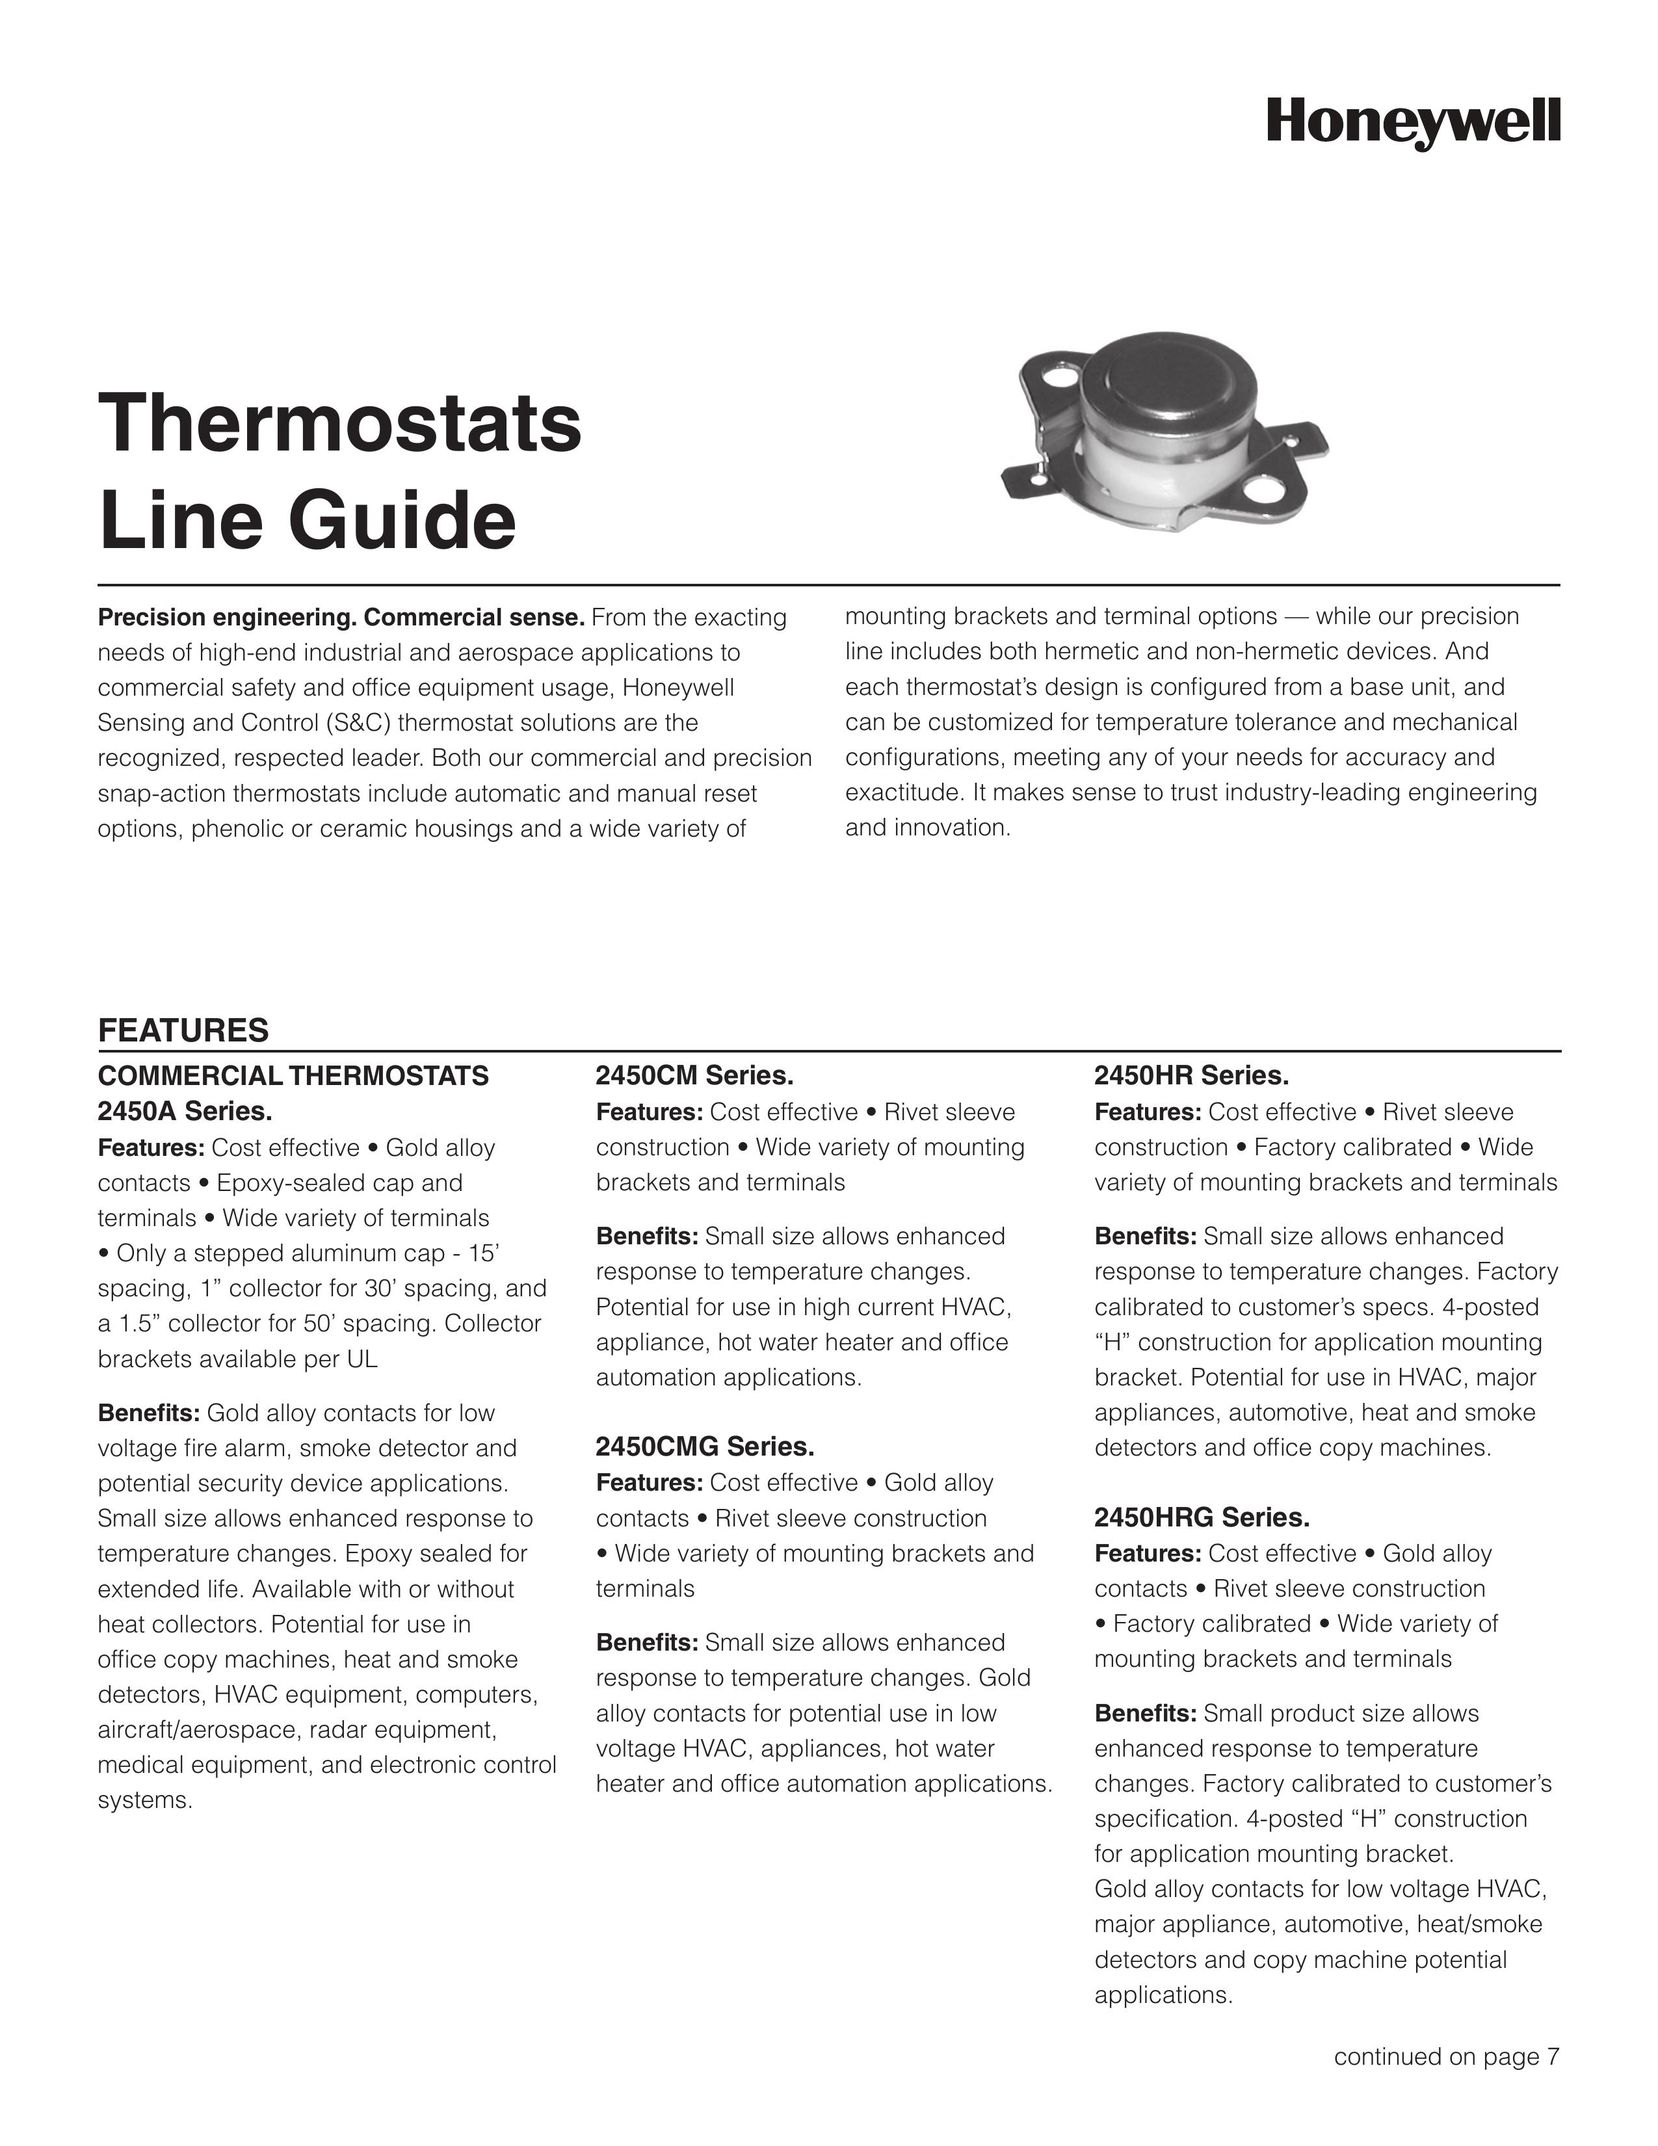 Honeywell 2450HR Thermostat User Manual